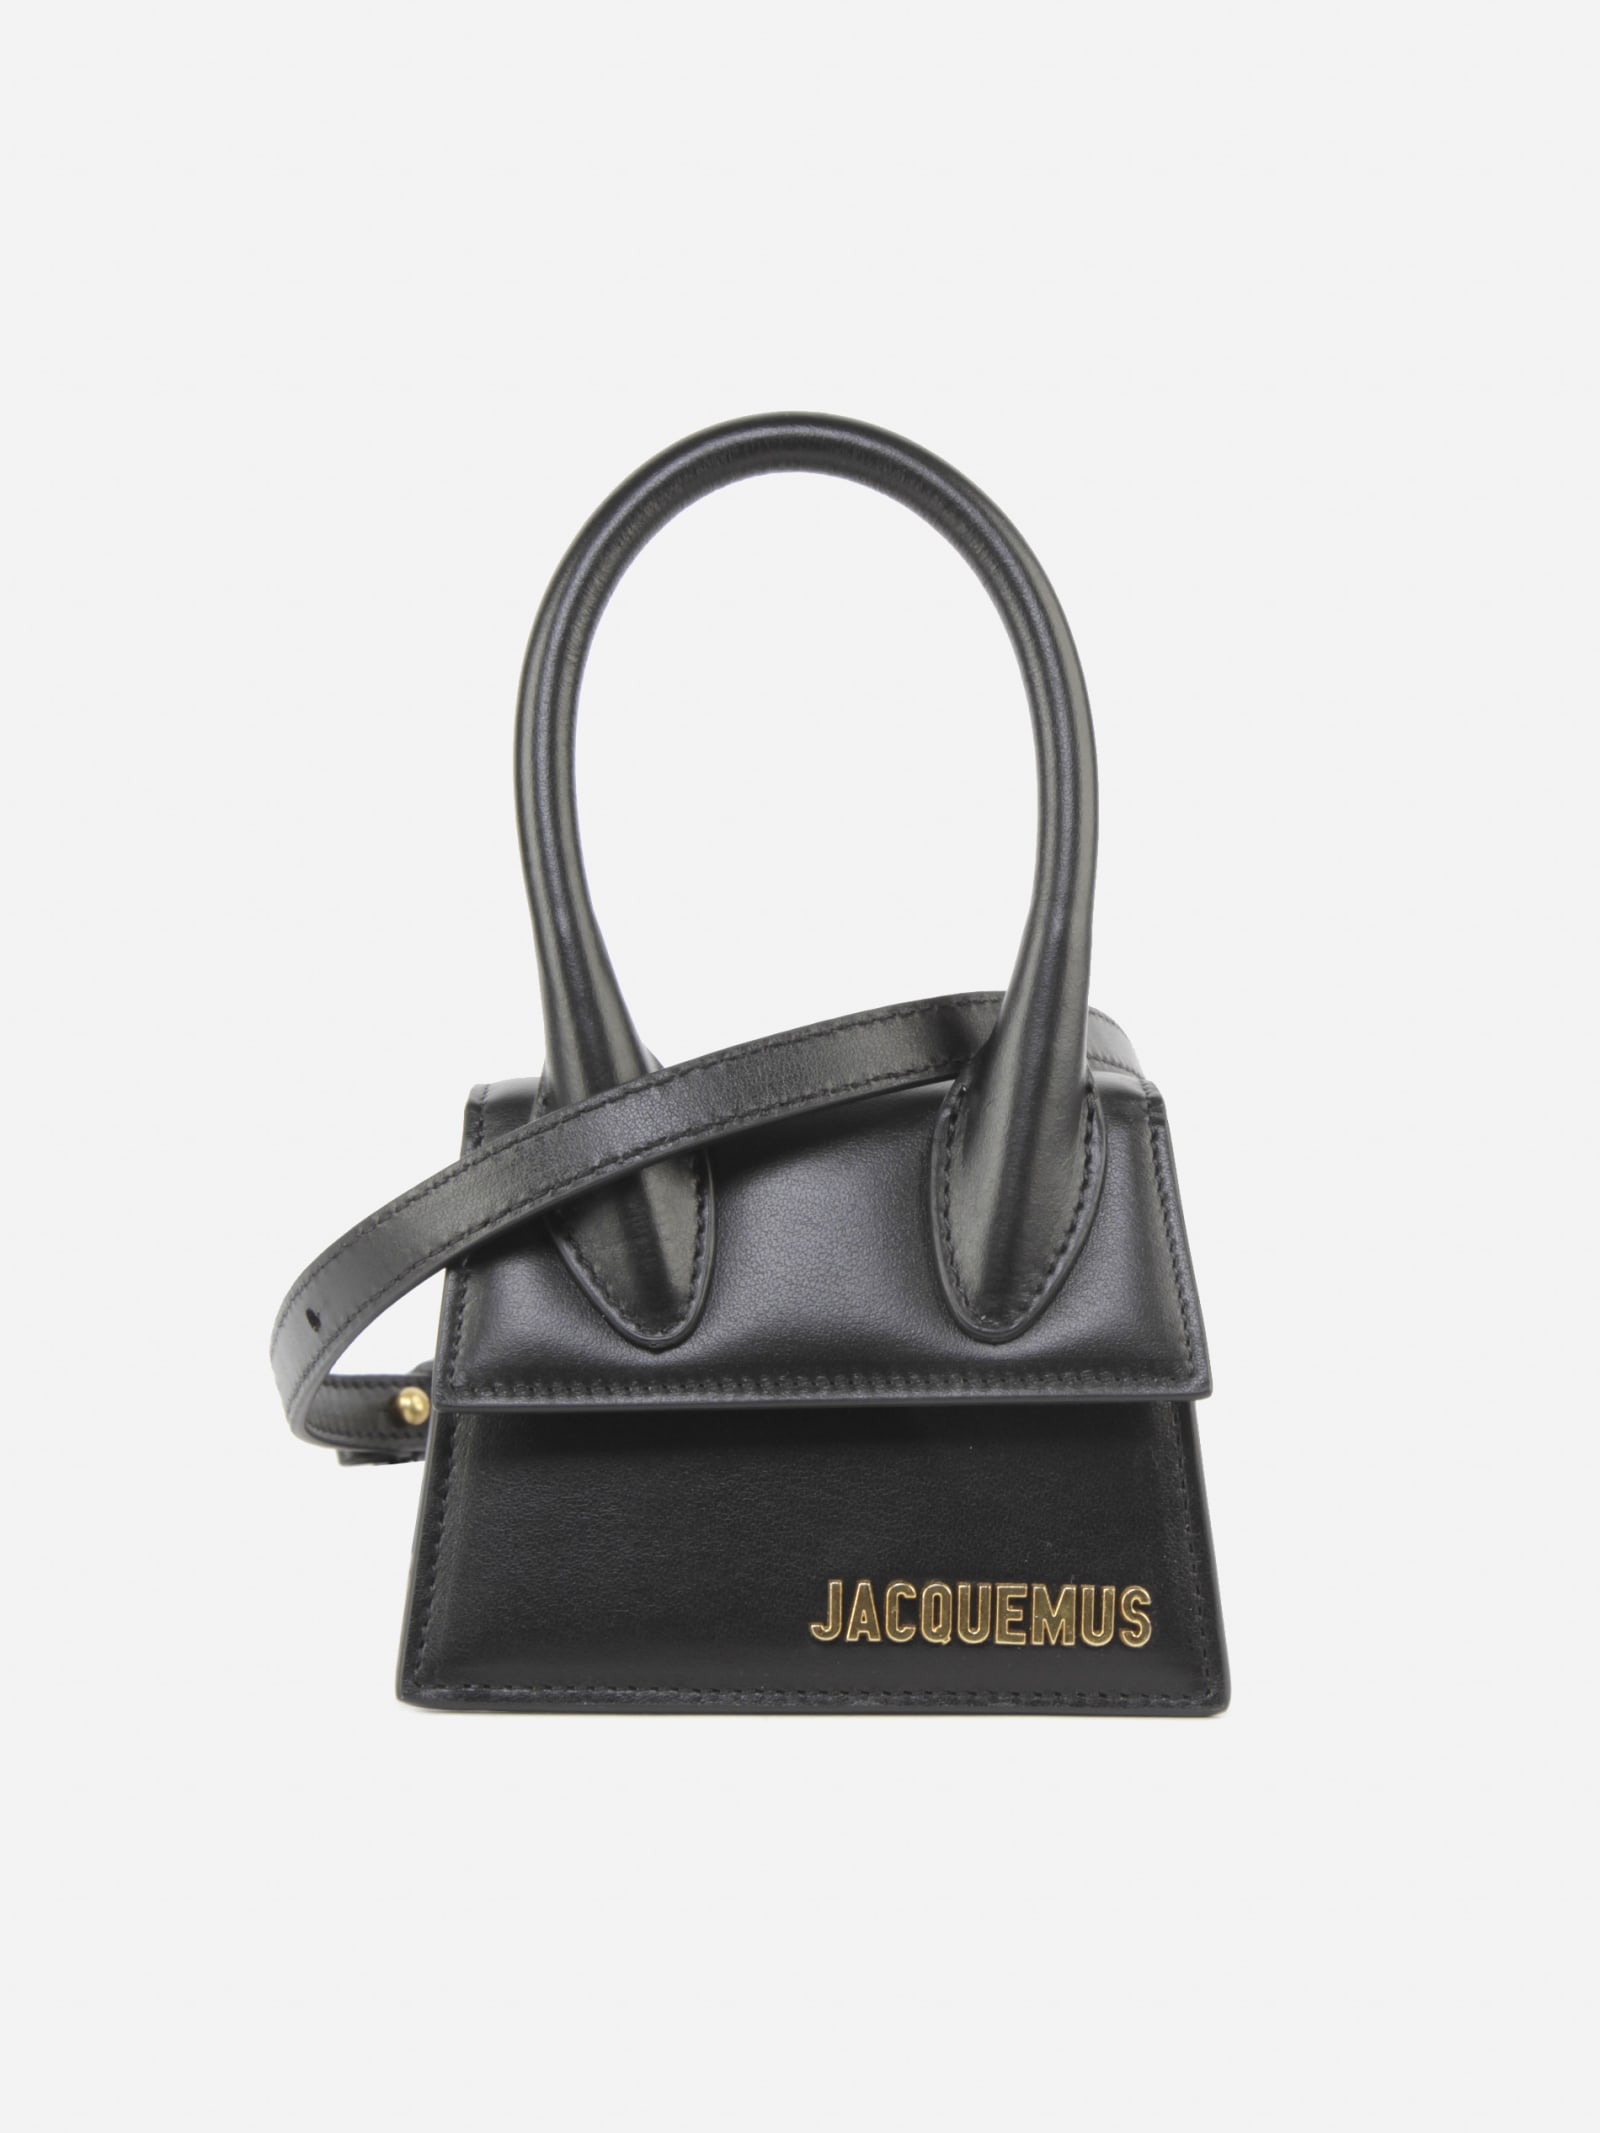 Jacquemus Le Chiquito Mini Bag In Leather | ModeSens